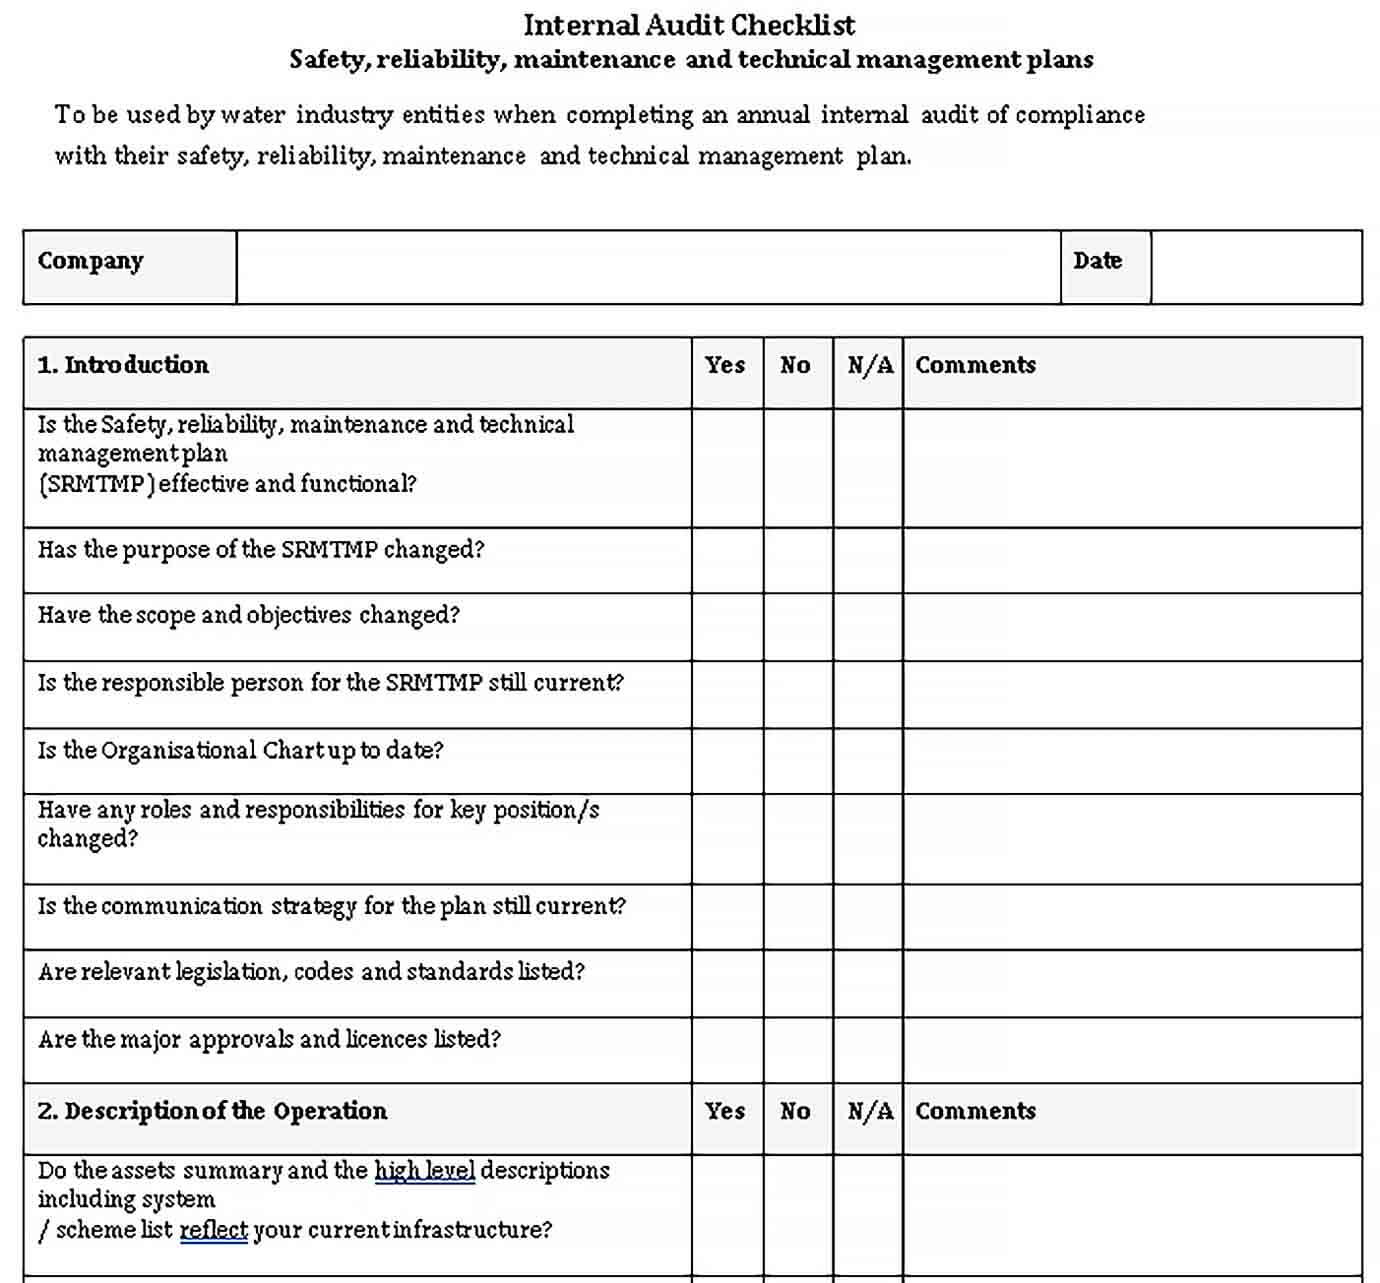 Sample Water Industry Internal Audit Checklist Template